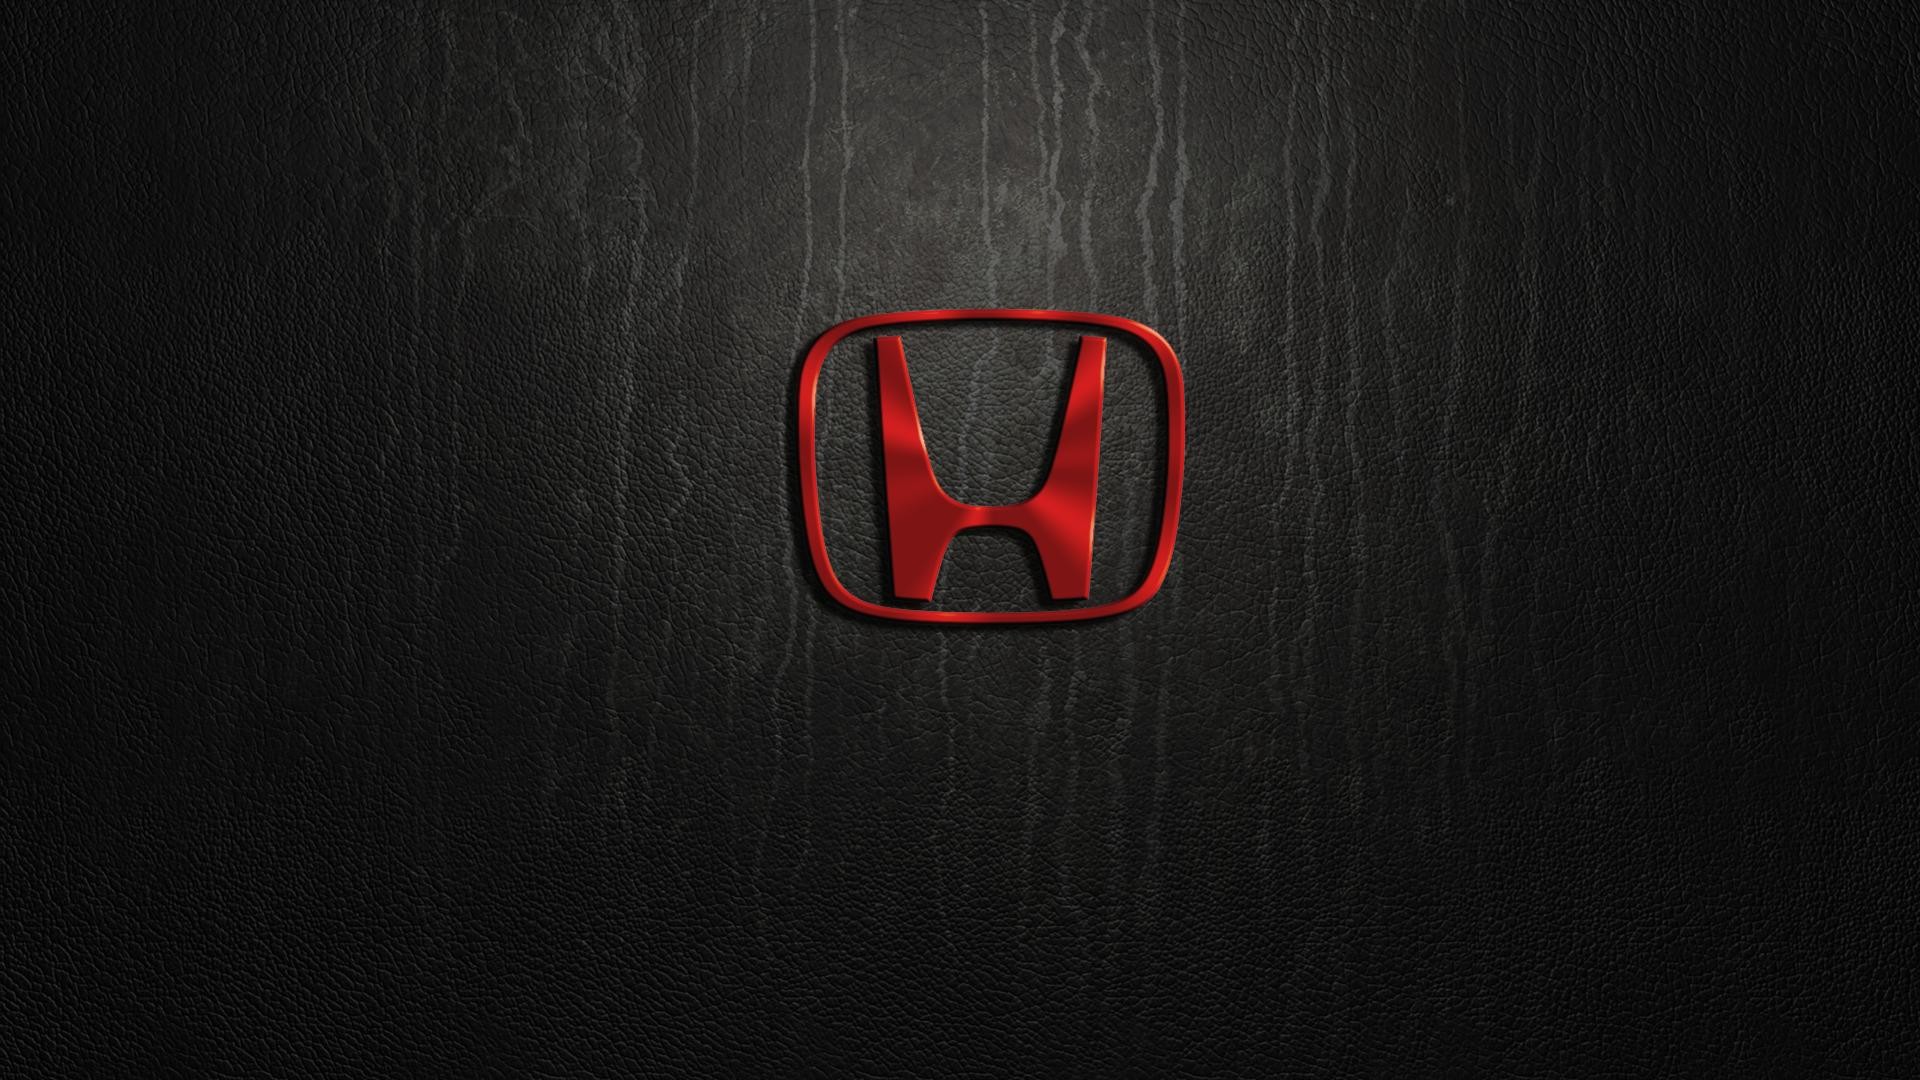 Full Hd Wallpaper Of Honda